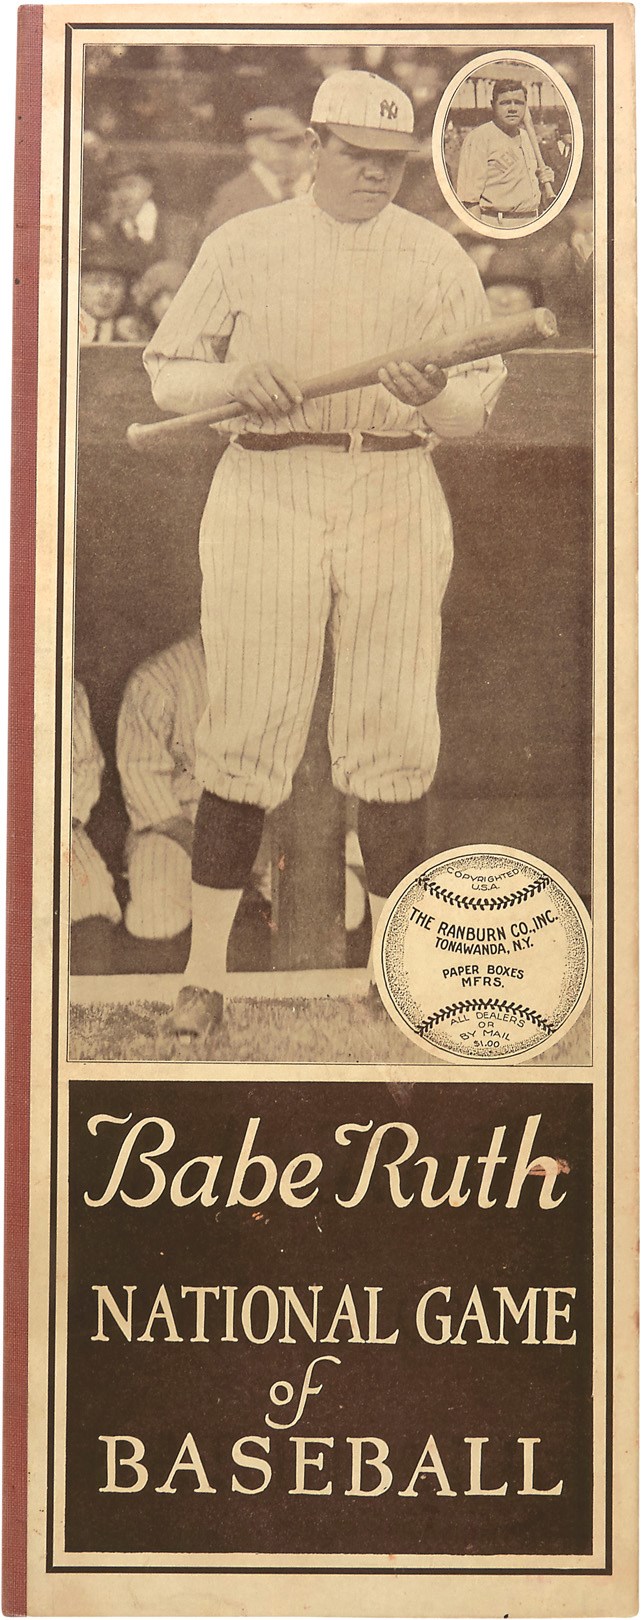 Ruth and Gehrig - 1921 Babe Ruth National Game of Baseball